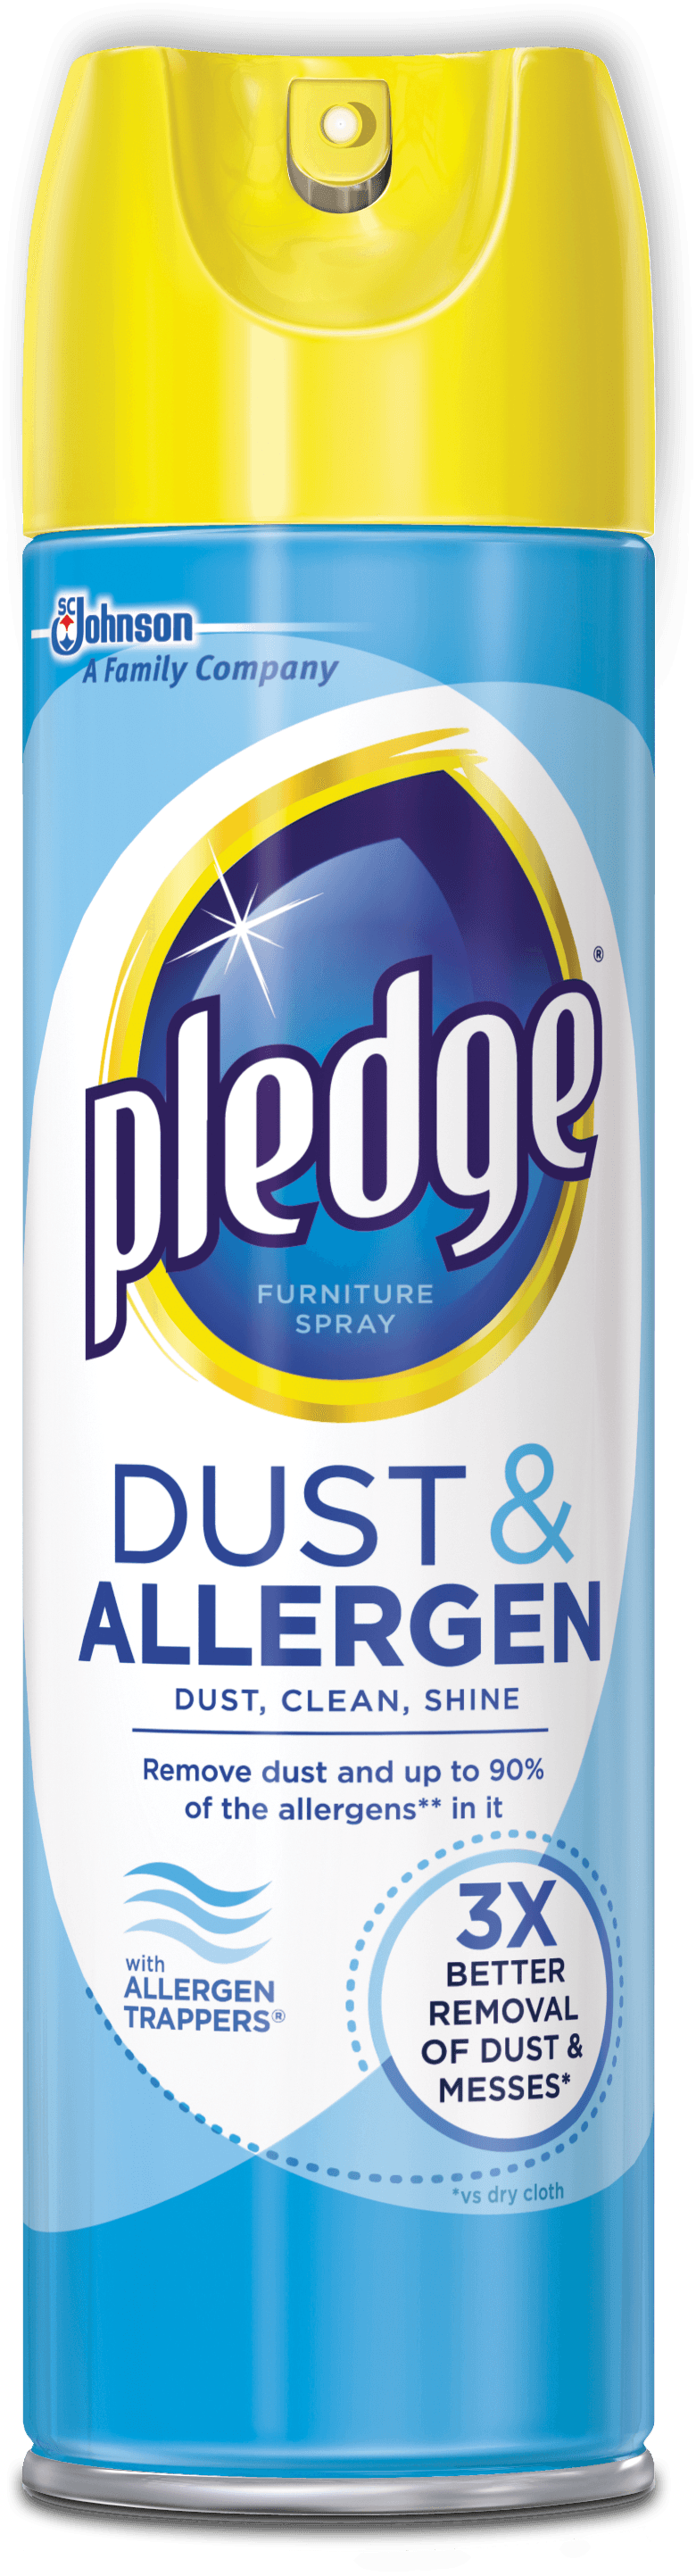 Dust U0026 Allergen Furniture Spray - Dust Rag, Transparent background PNG HD thumbnail